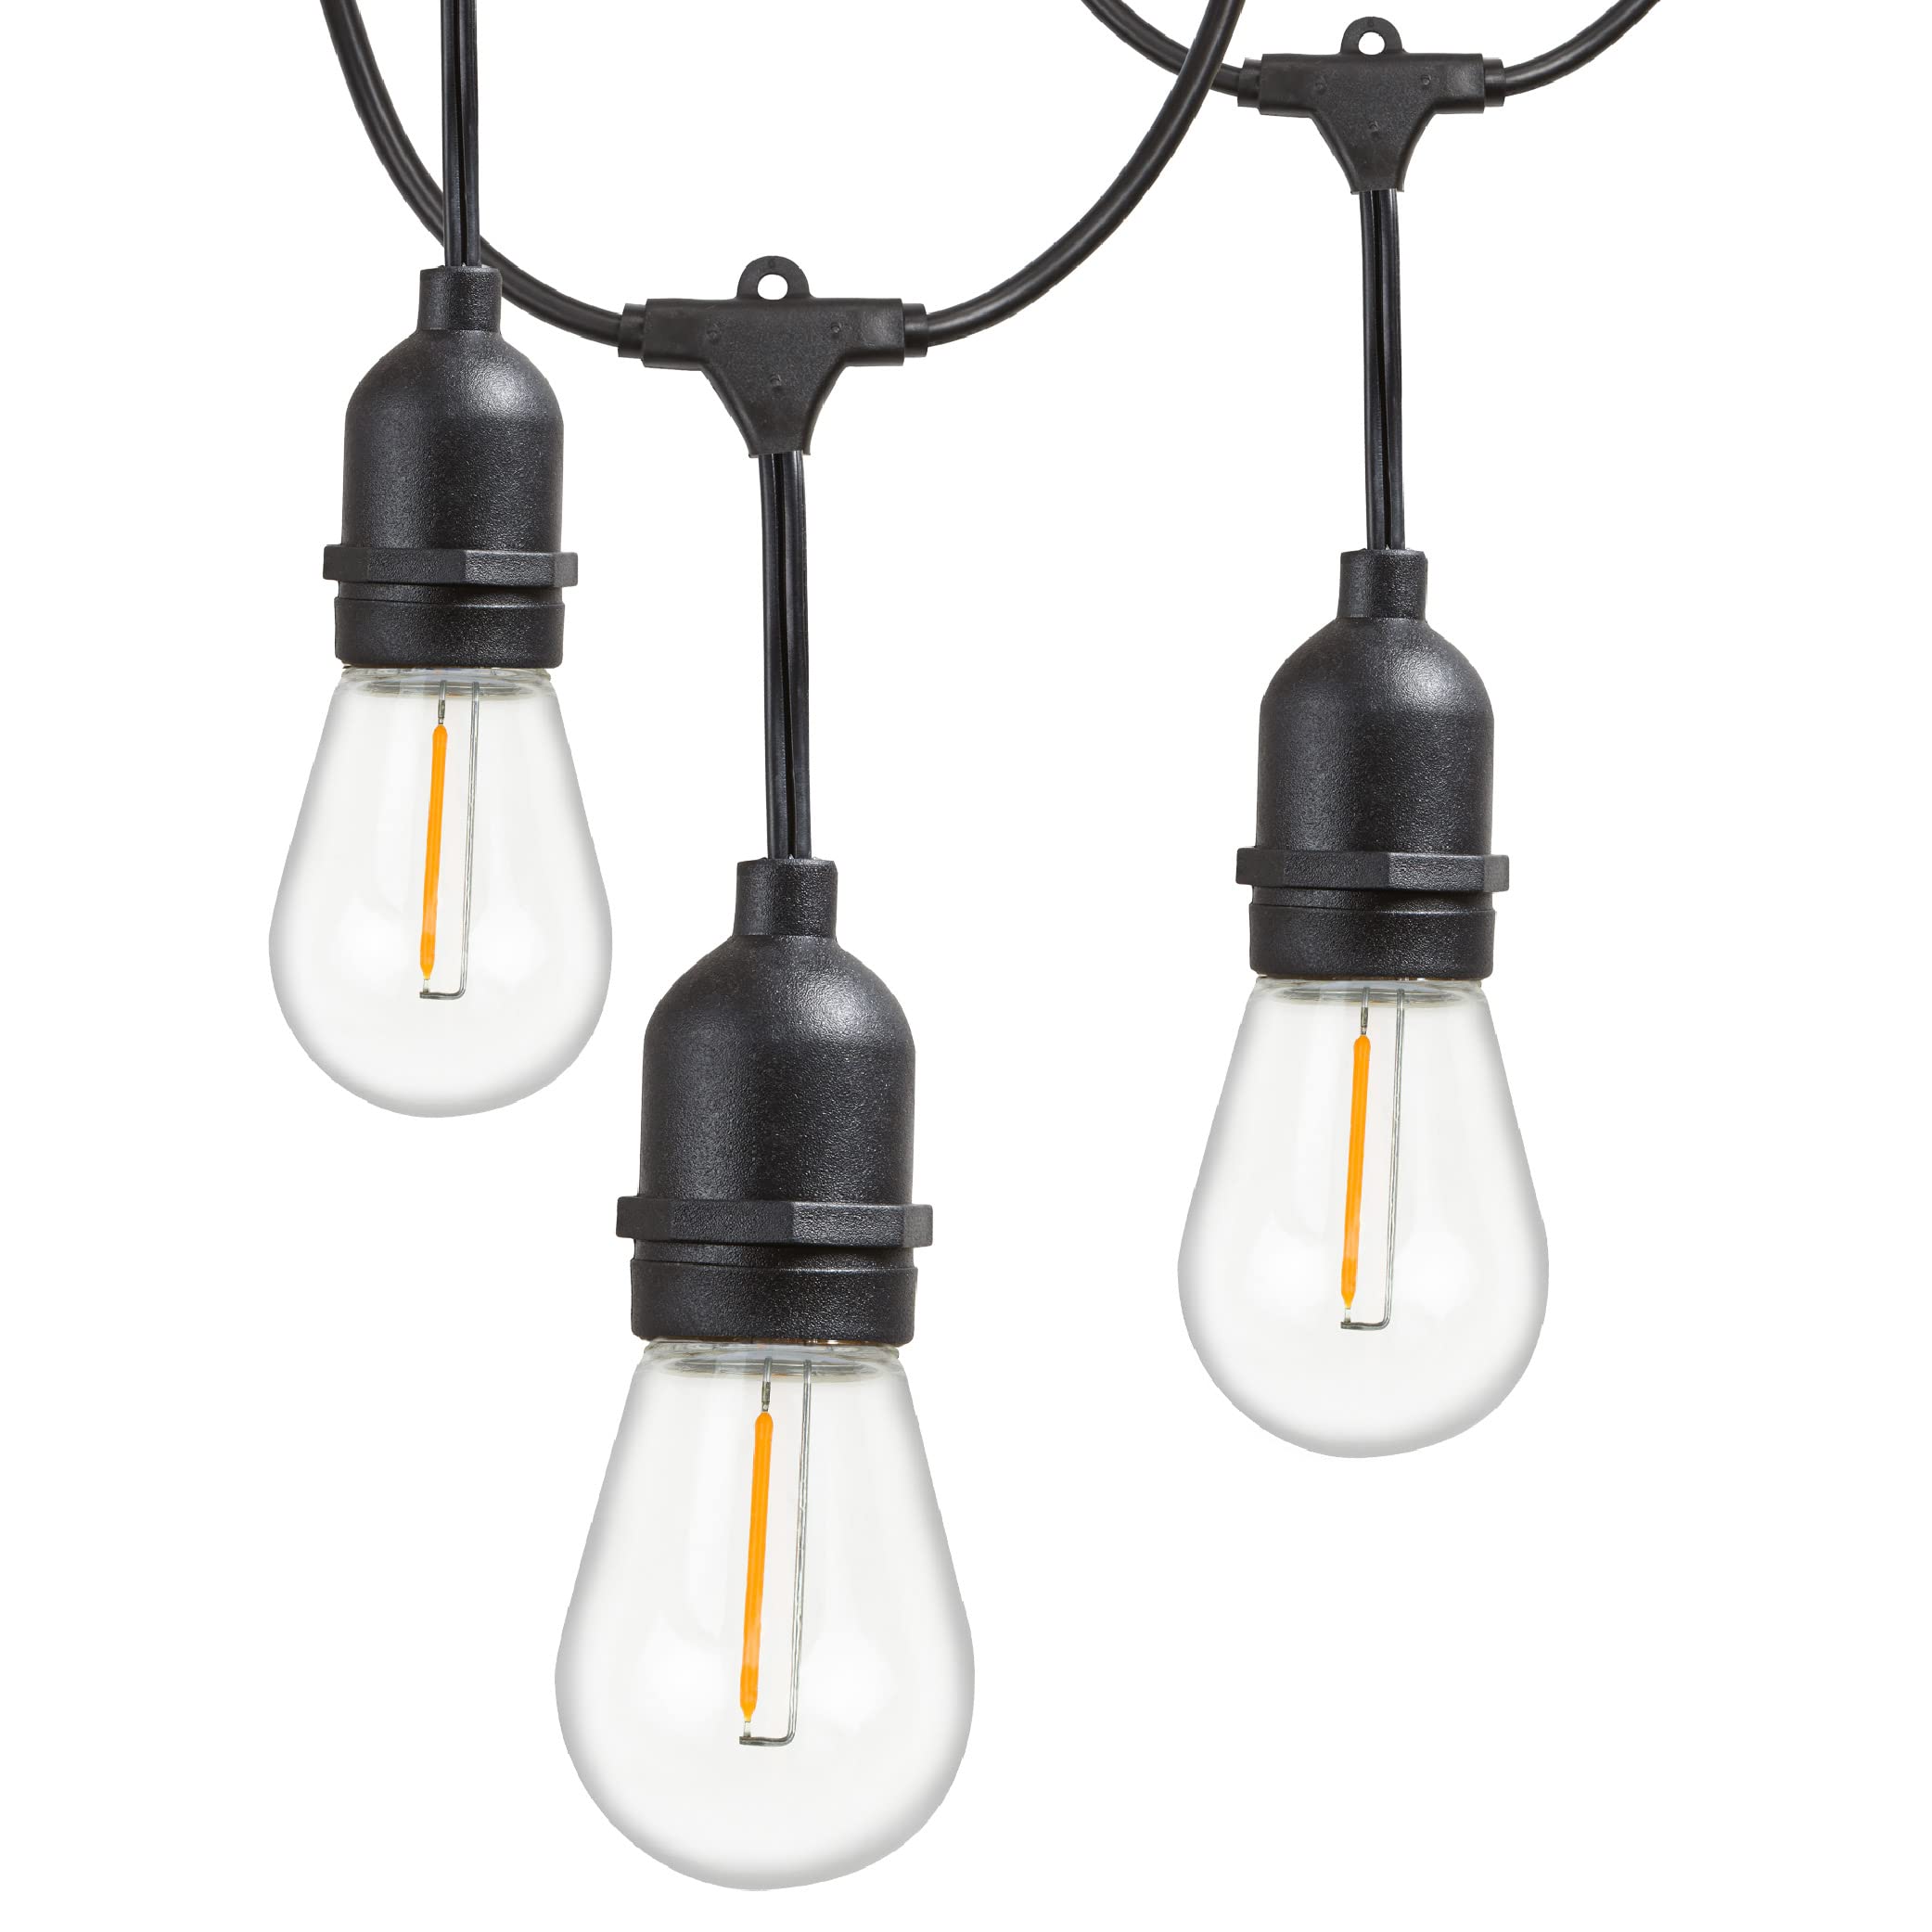 Newhouse Lighting CSTRINGLED18 Hanging Sockets | Weatherproof Technology String Light, 48 ft, Black, 48 ft